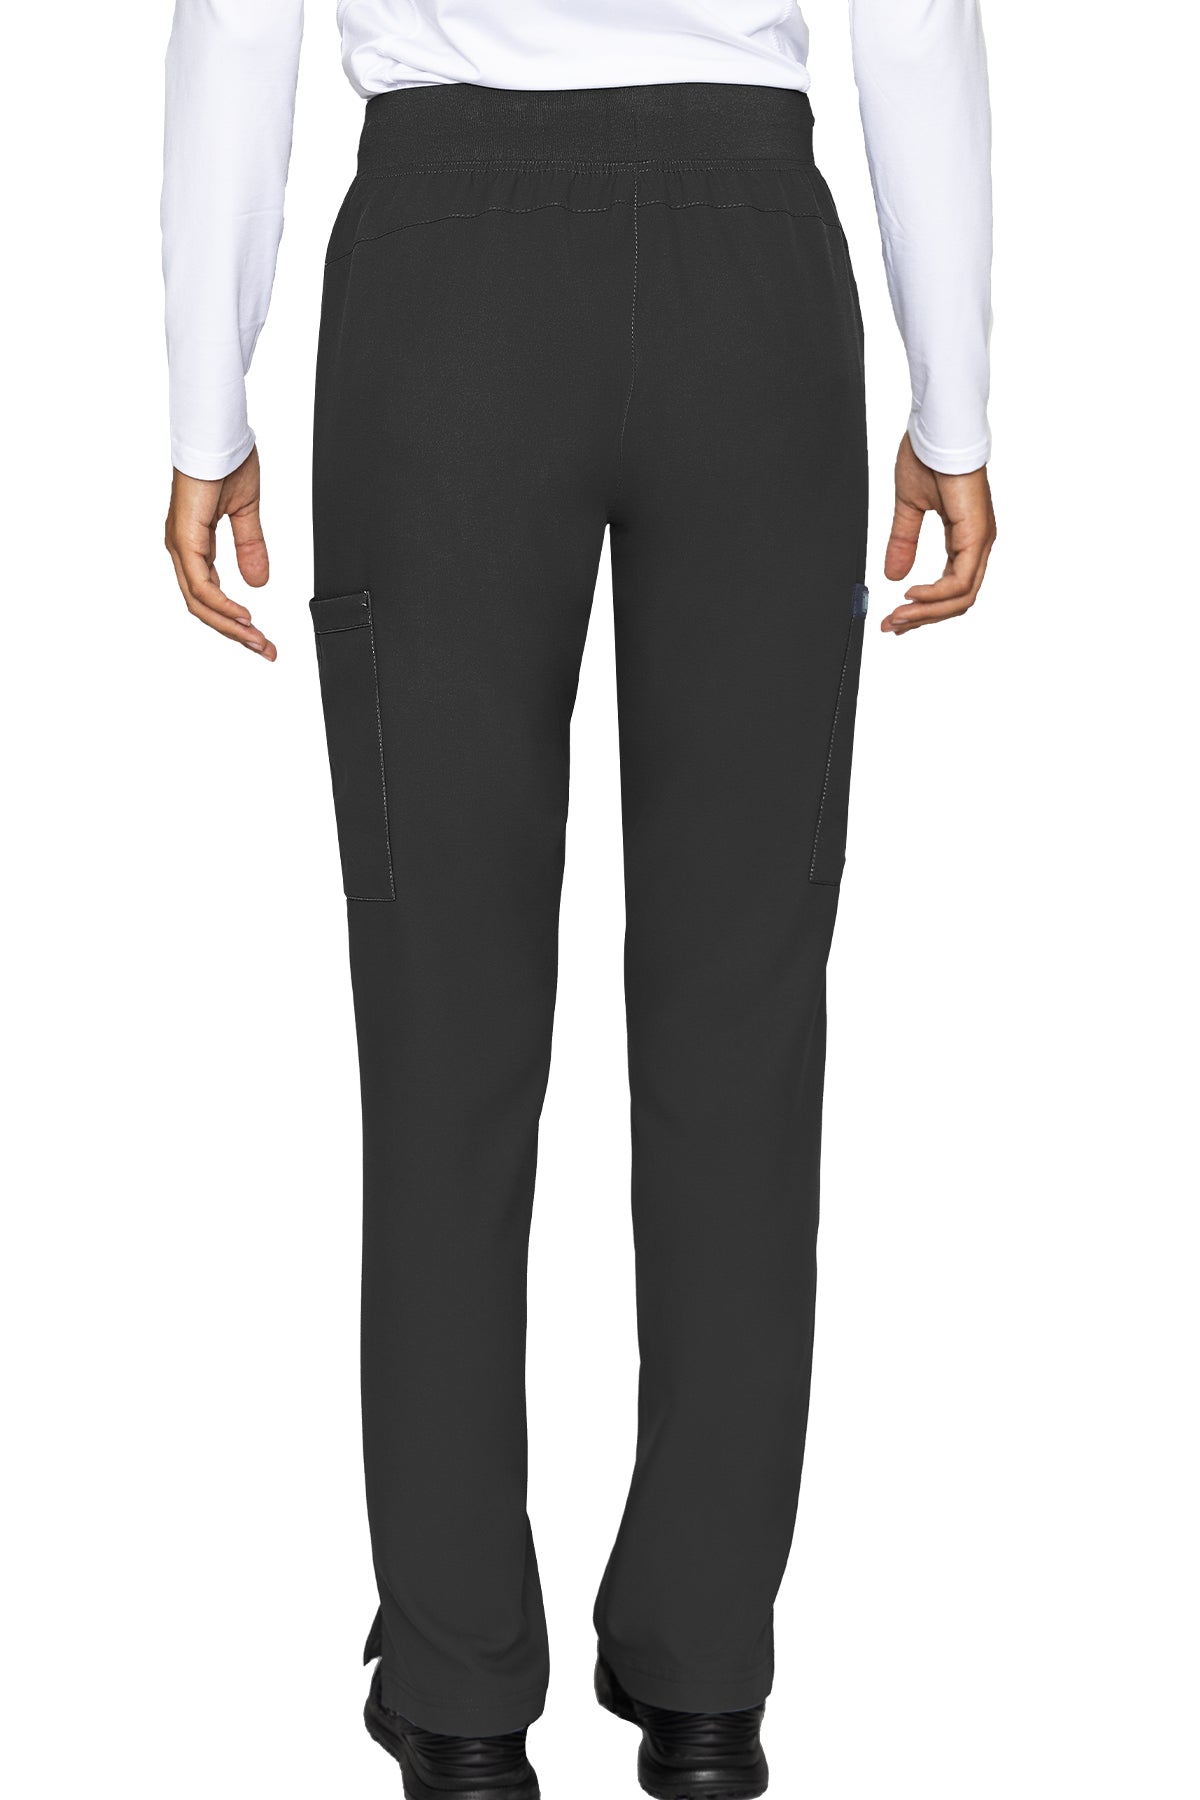 Med Couture 2702 Insight Women's Zipper Pocket Pant - PETITE Black Back 